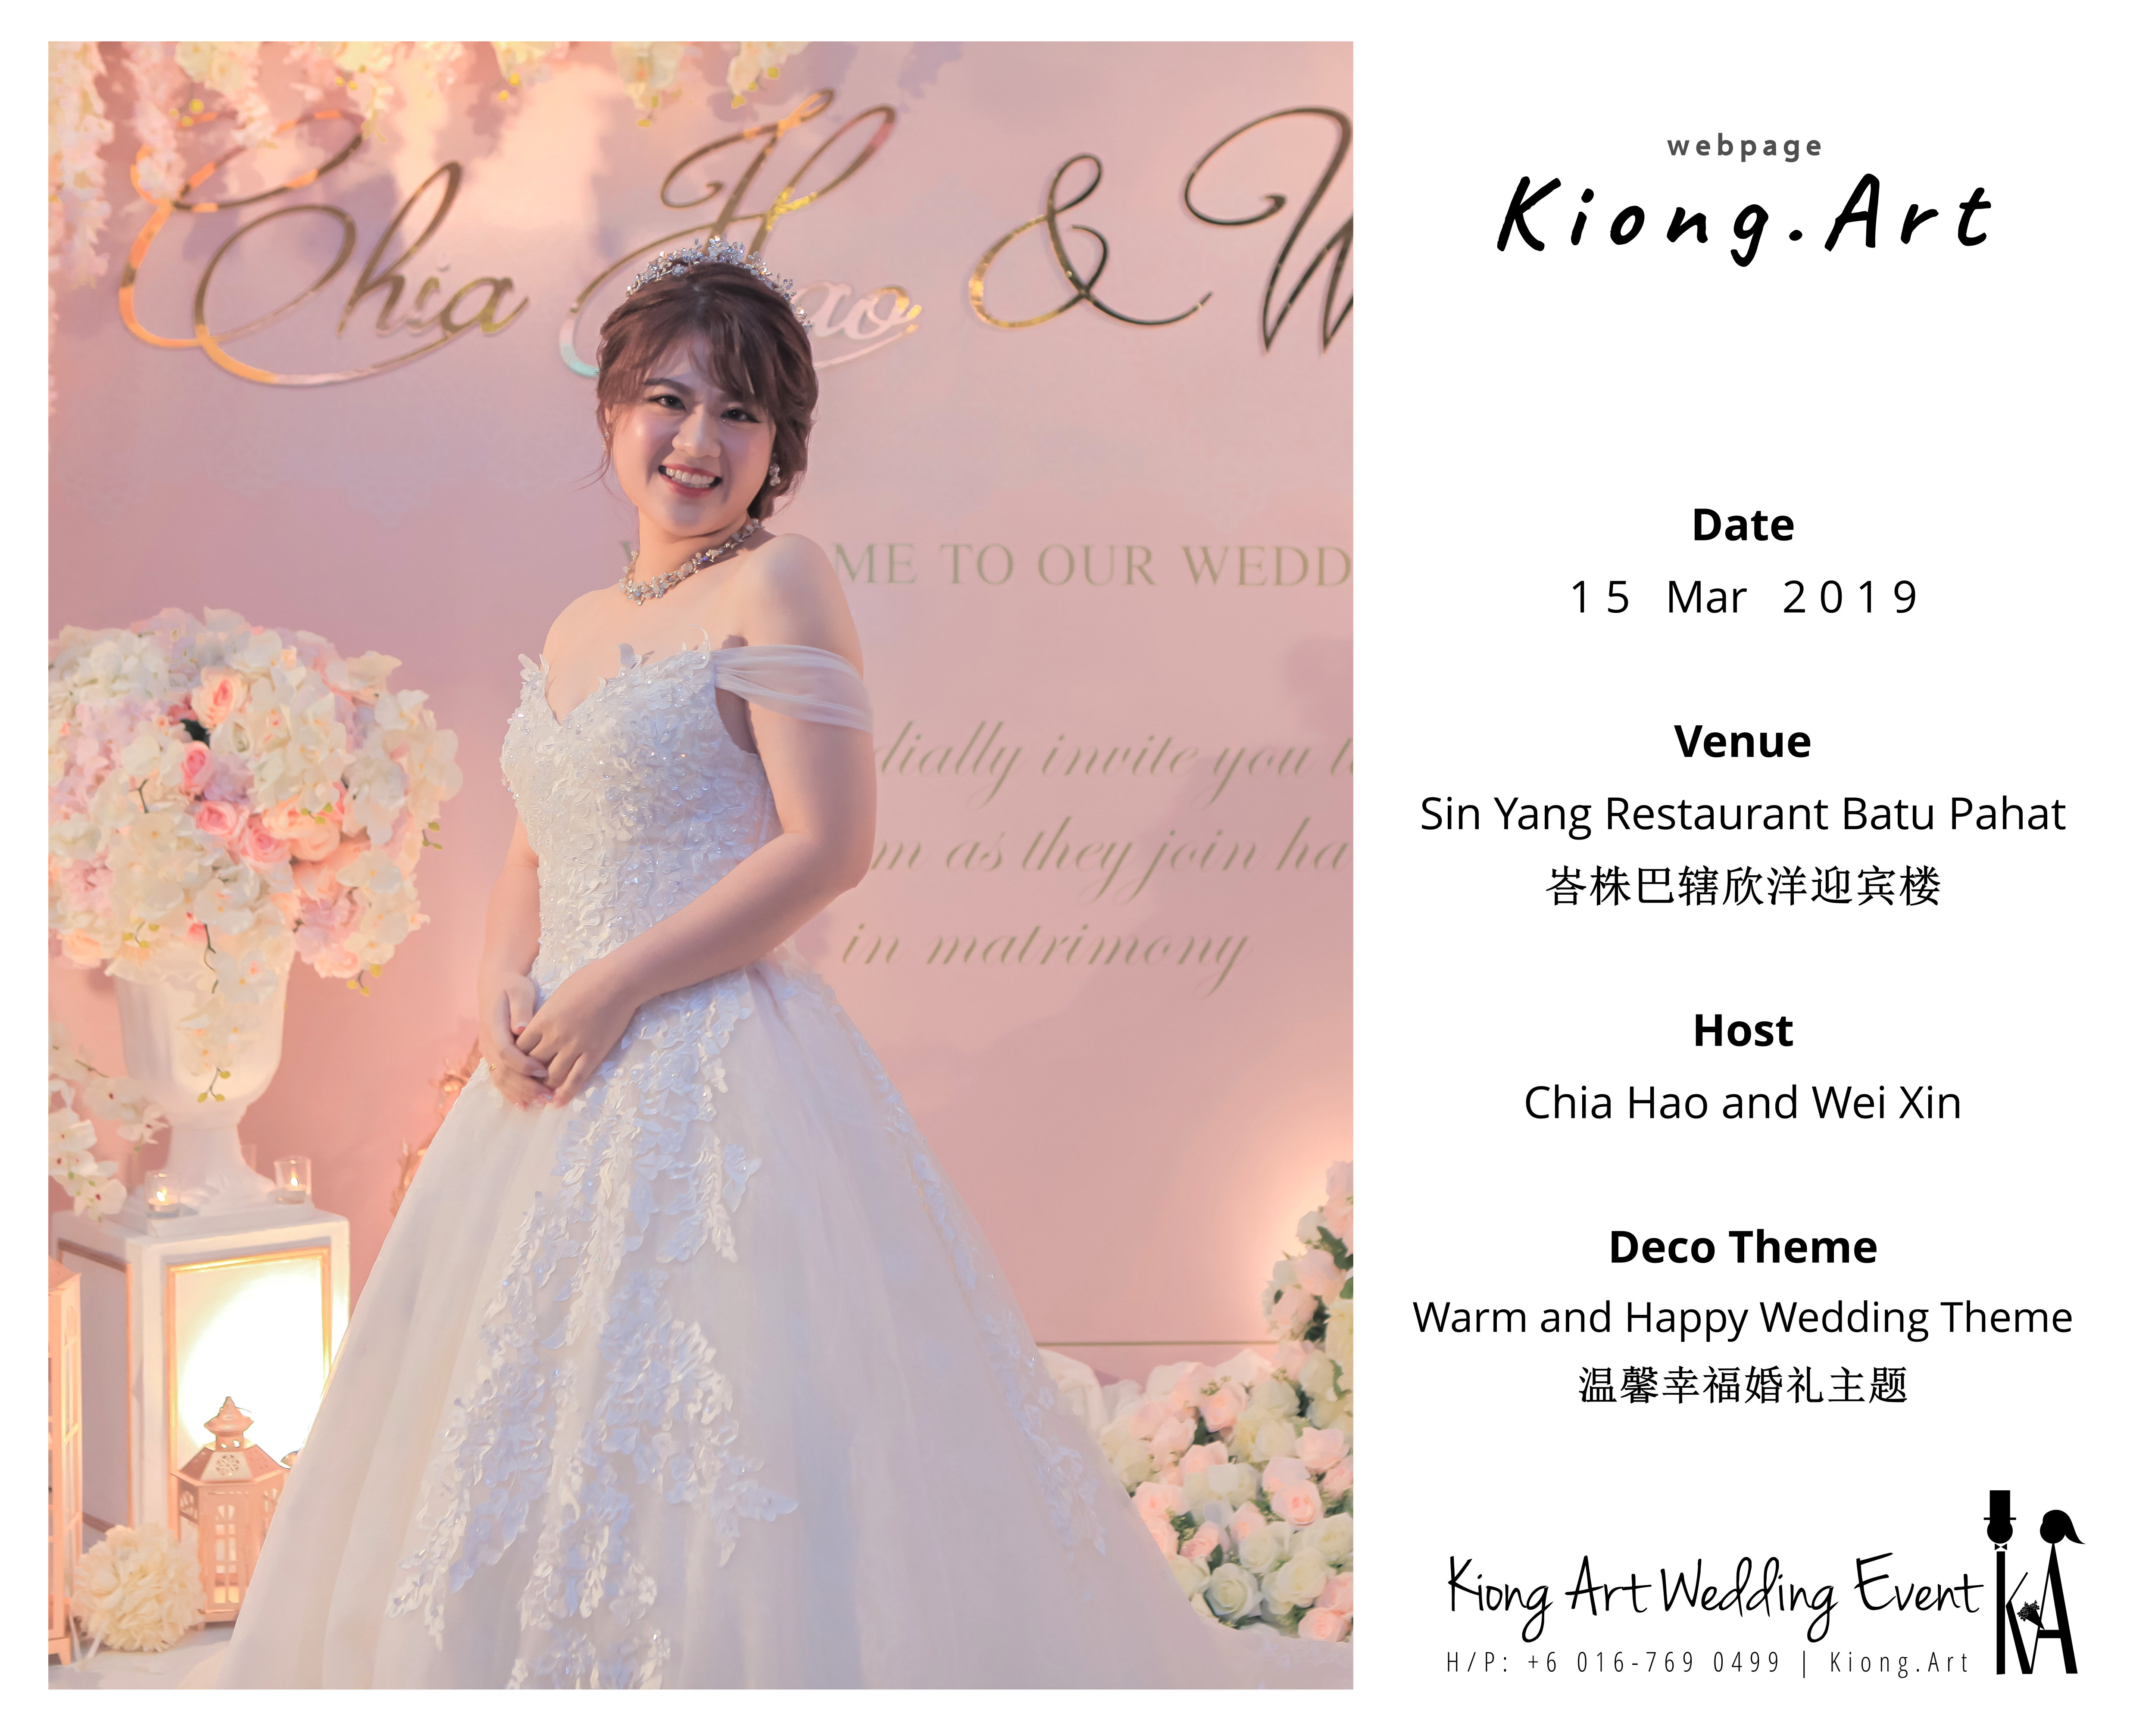 Malaysia Wed Kuala Lumpur Wedding Deco Decoration Kiong Art Wedding Deco Warm and Happy Wedding Theme Chia Hao and Wei Xin Sin Yang Restaurant Batu Pahat A15-A00-010